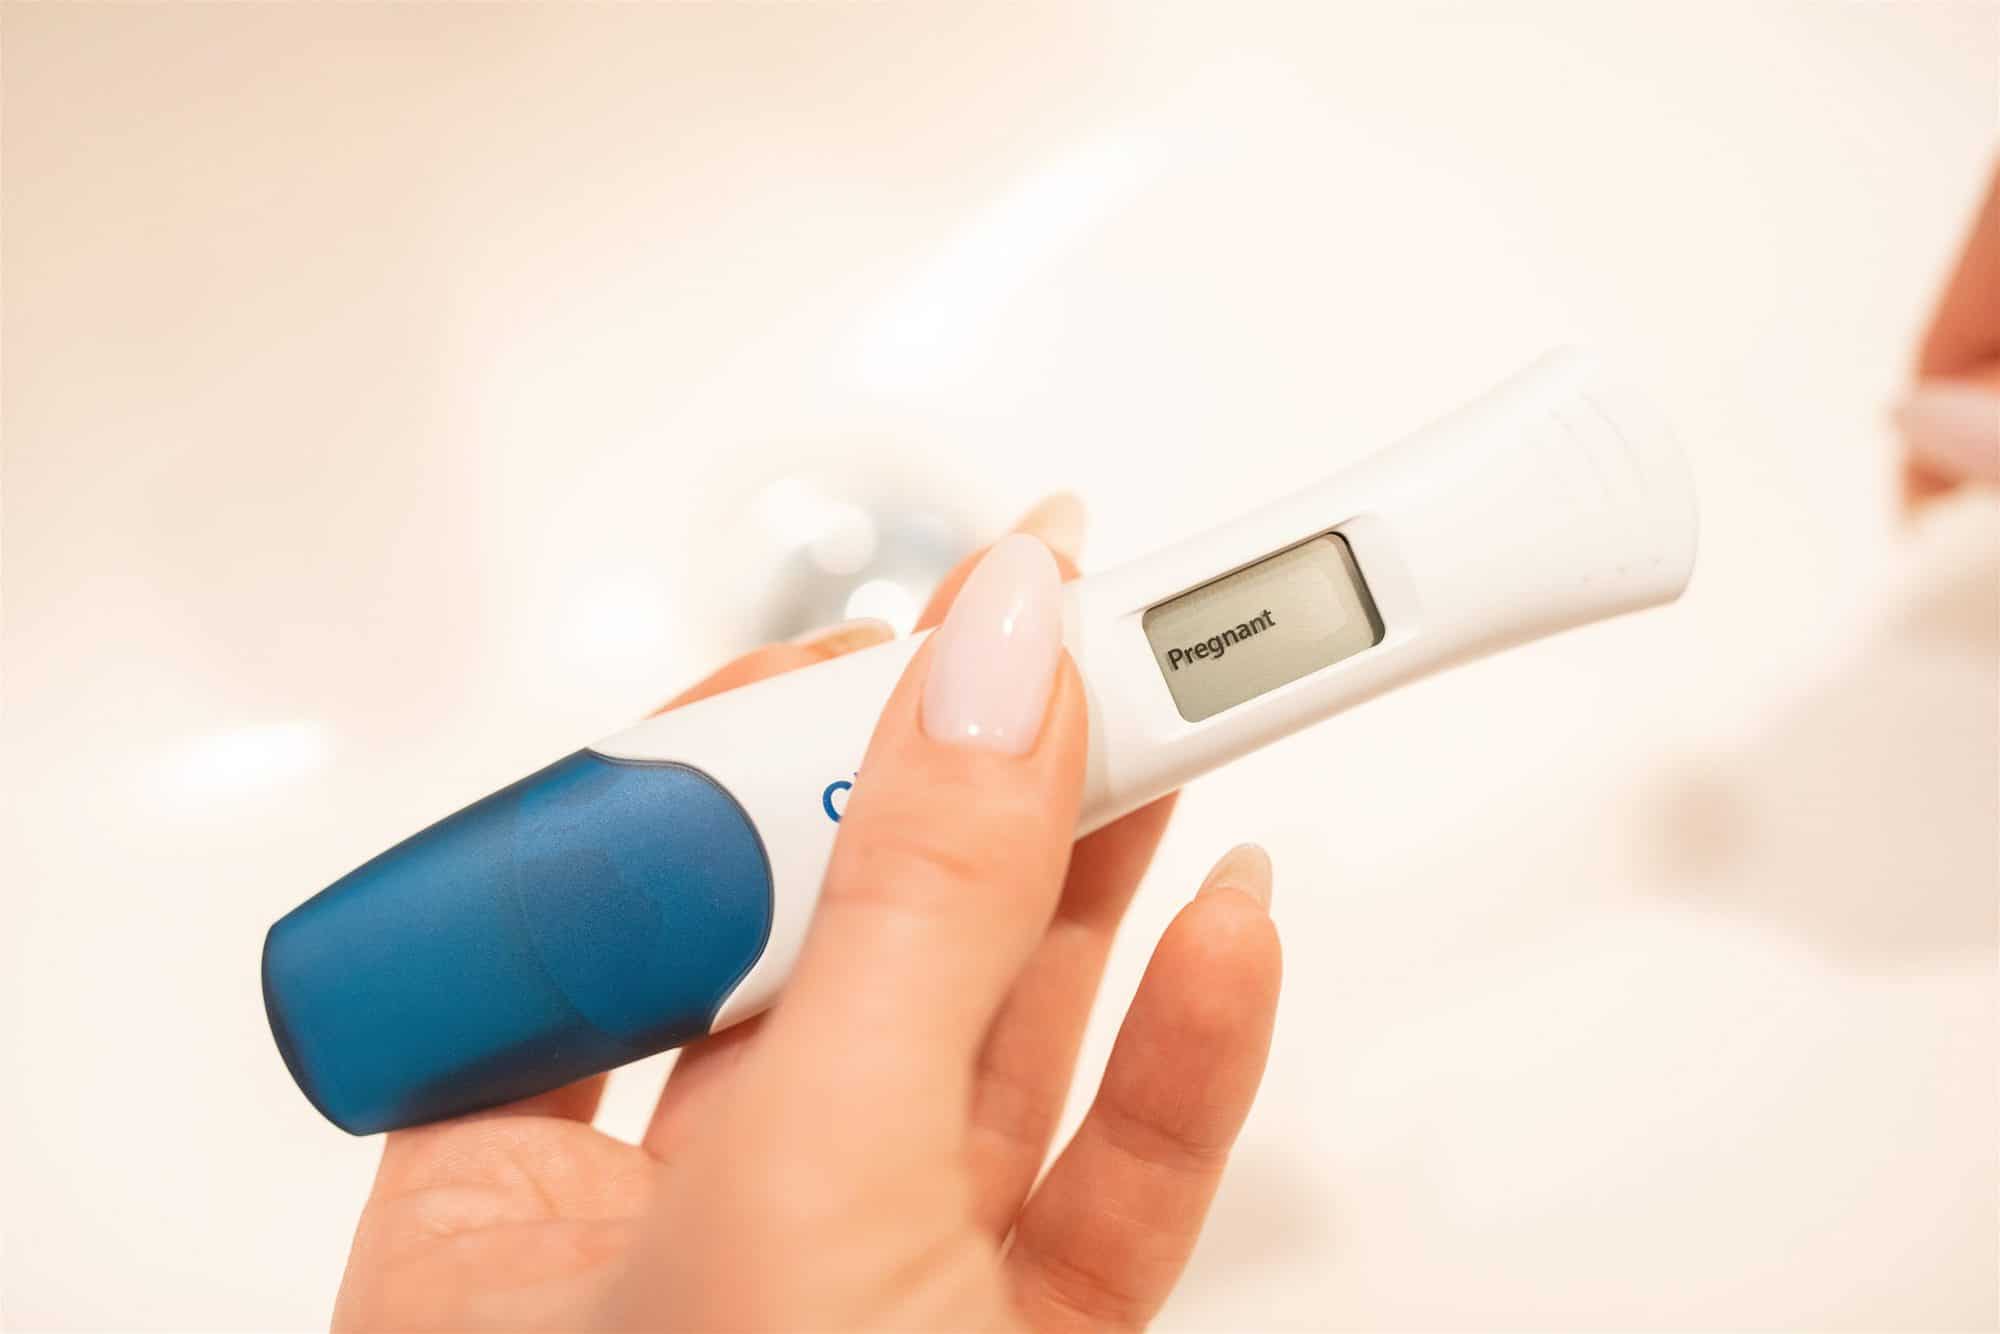 Tests embarazo caseros: Fiables? - Criar con Sentido Común